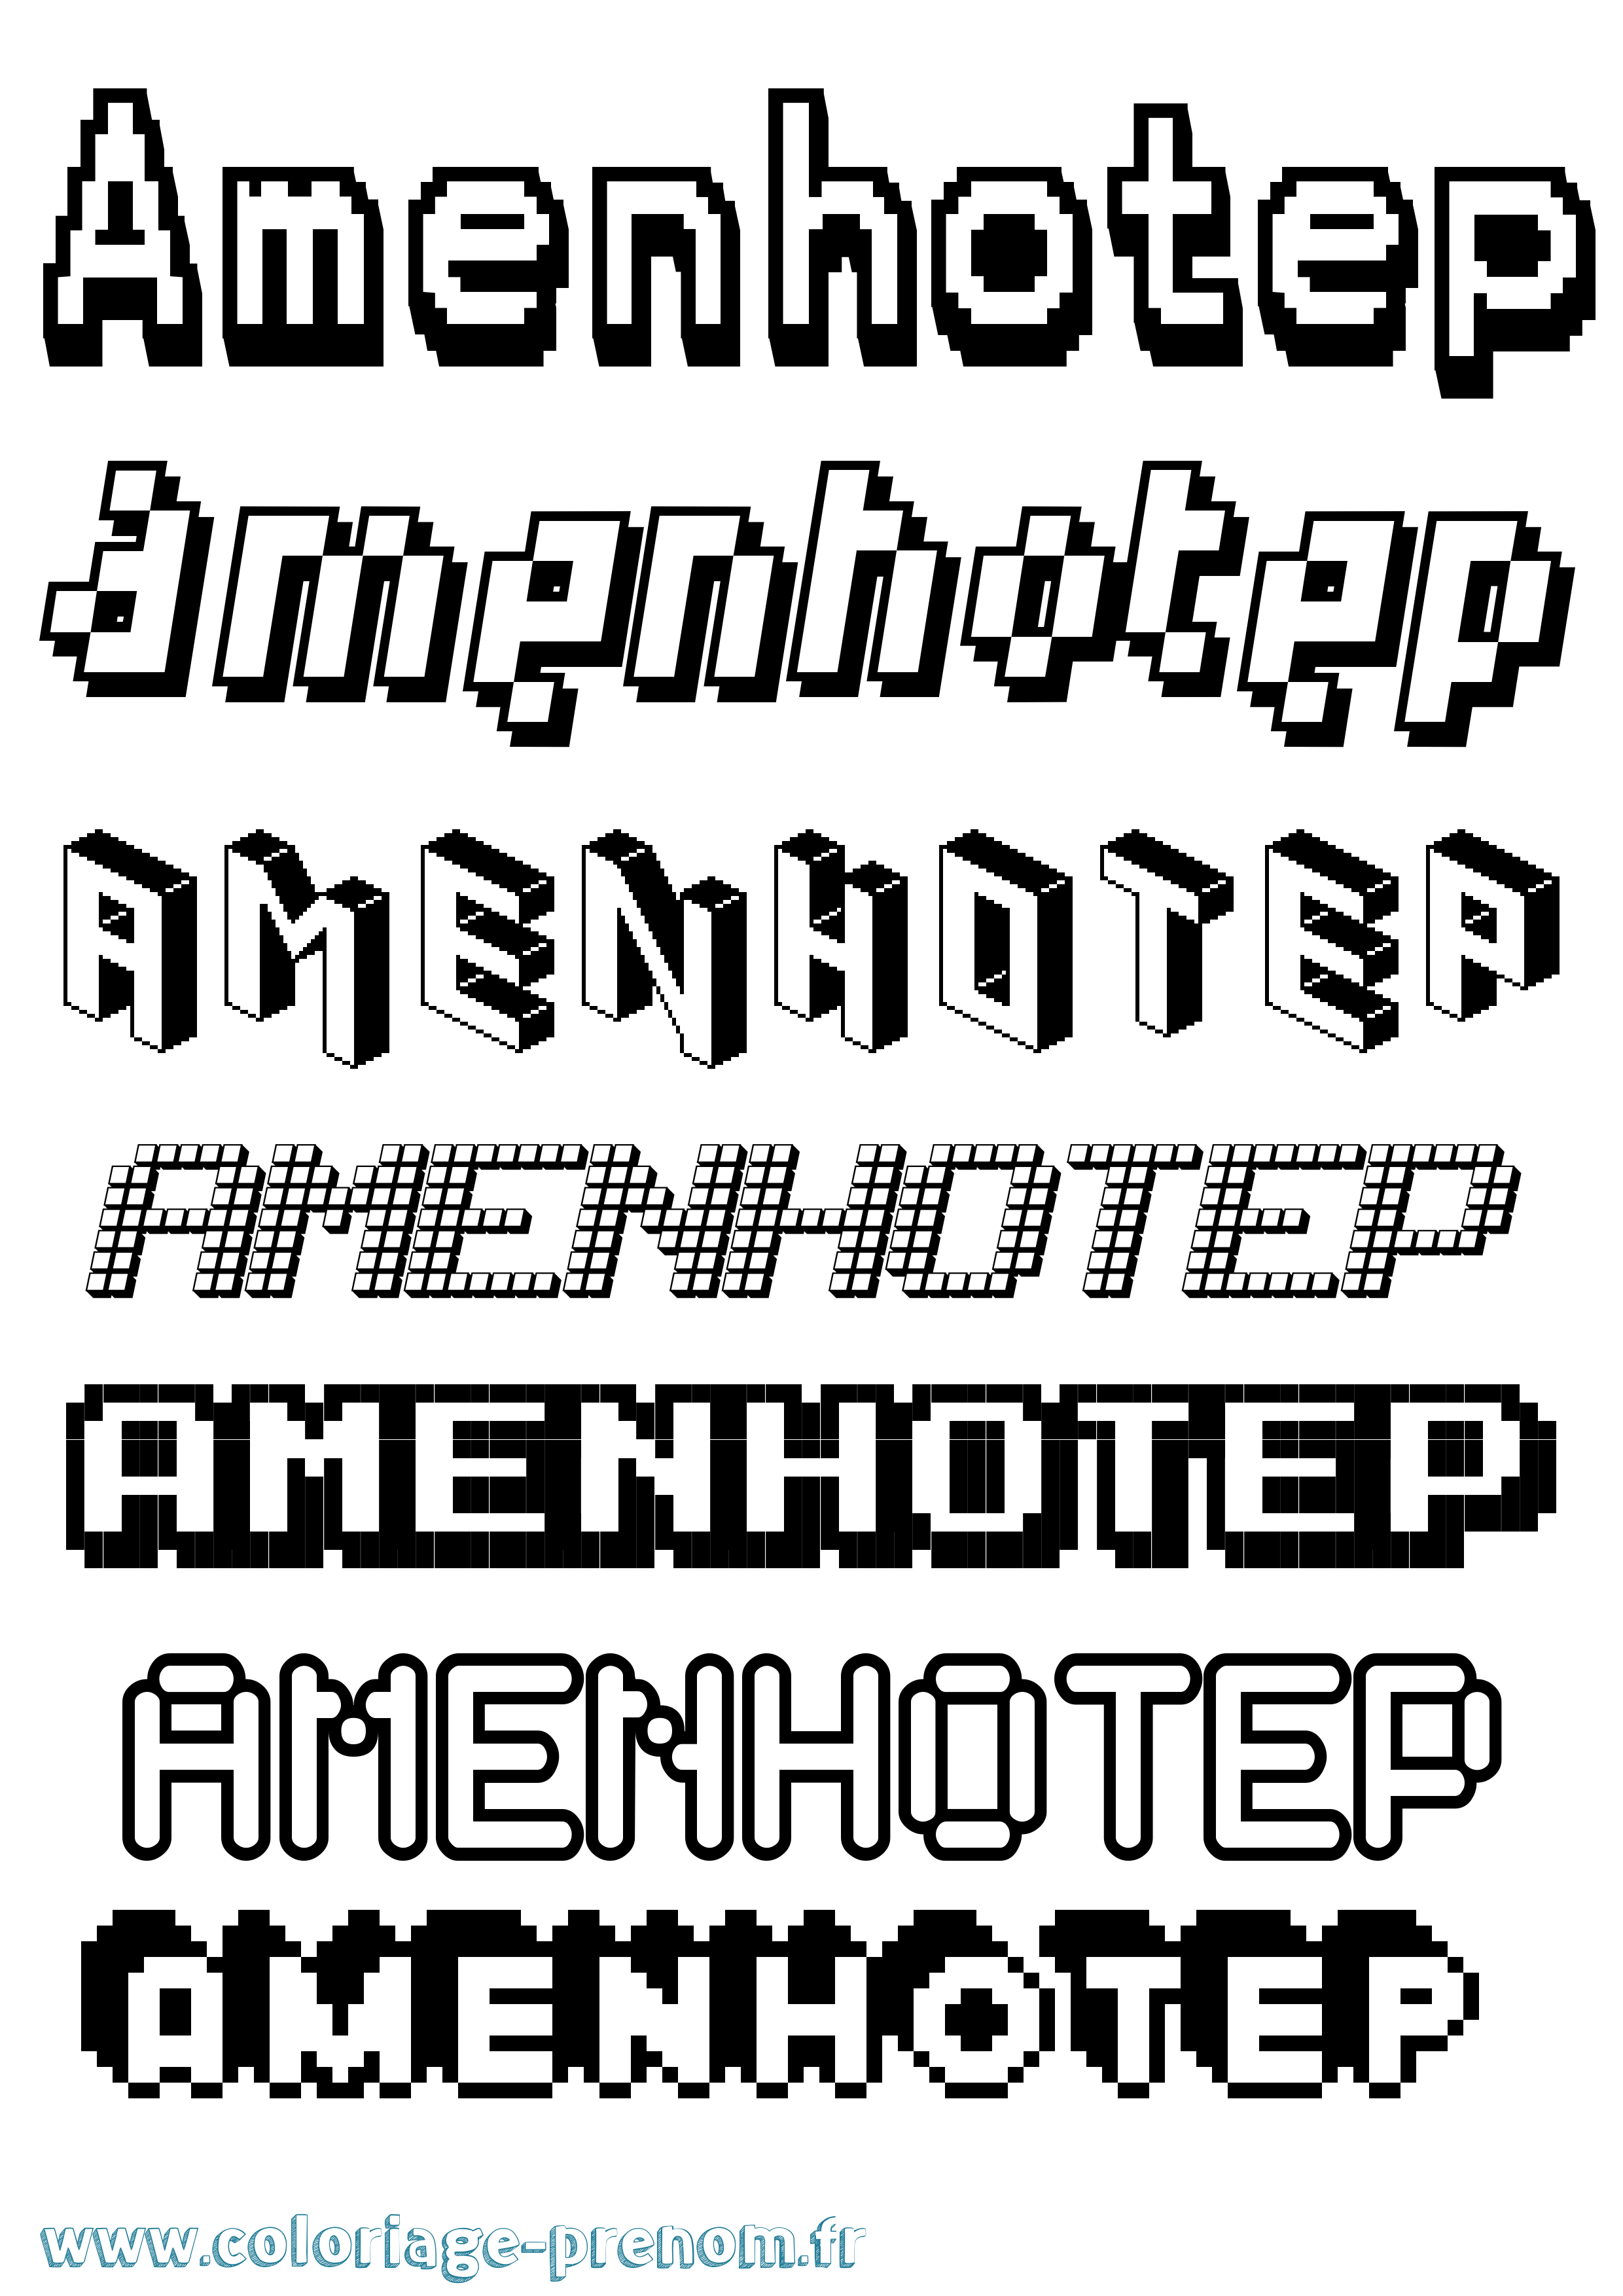 Coloriage prénom Amenhotep Pixel